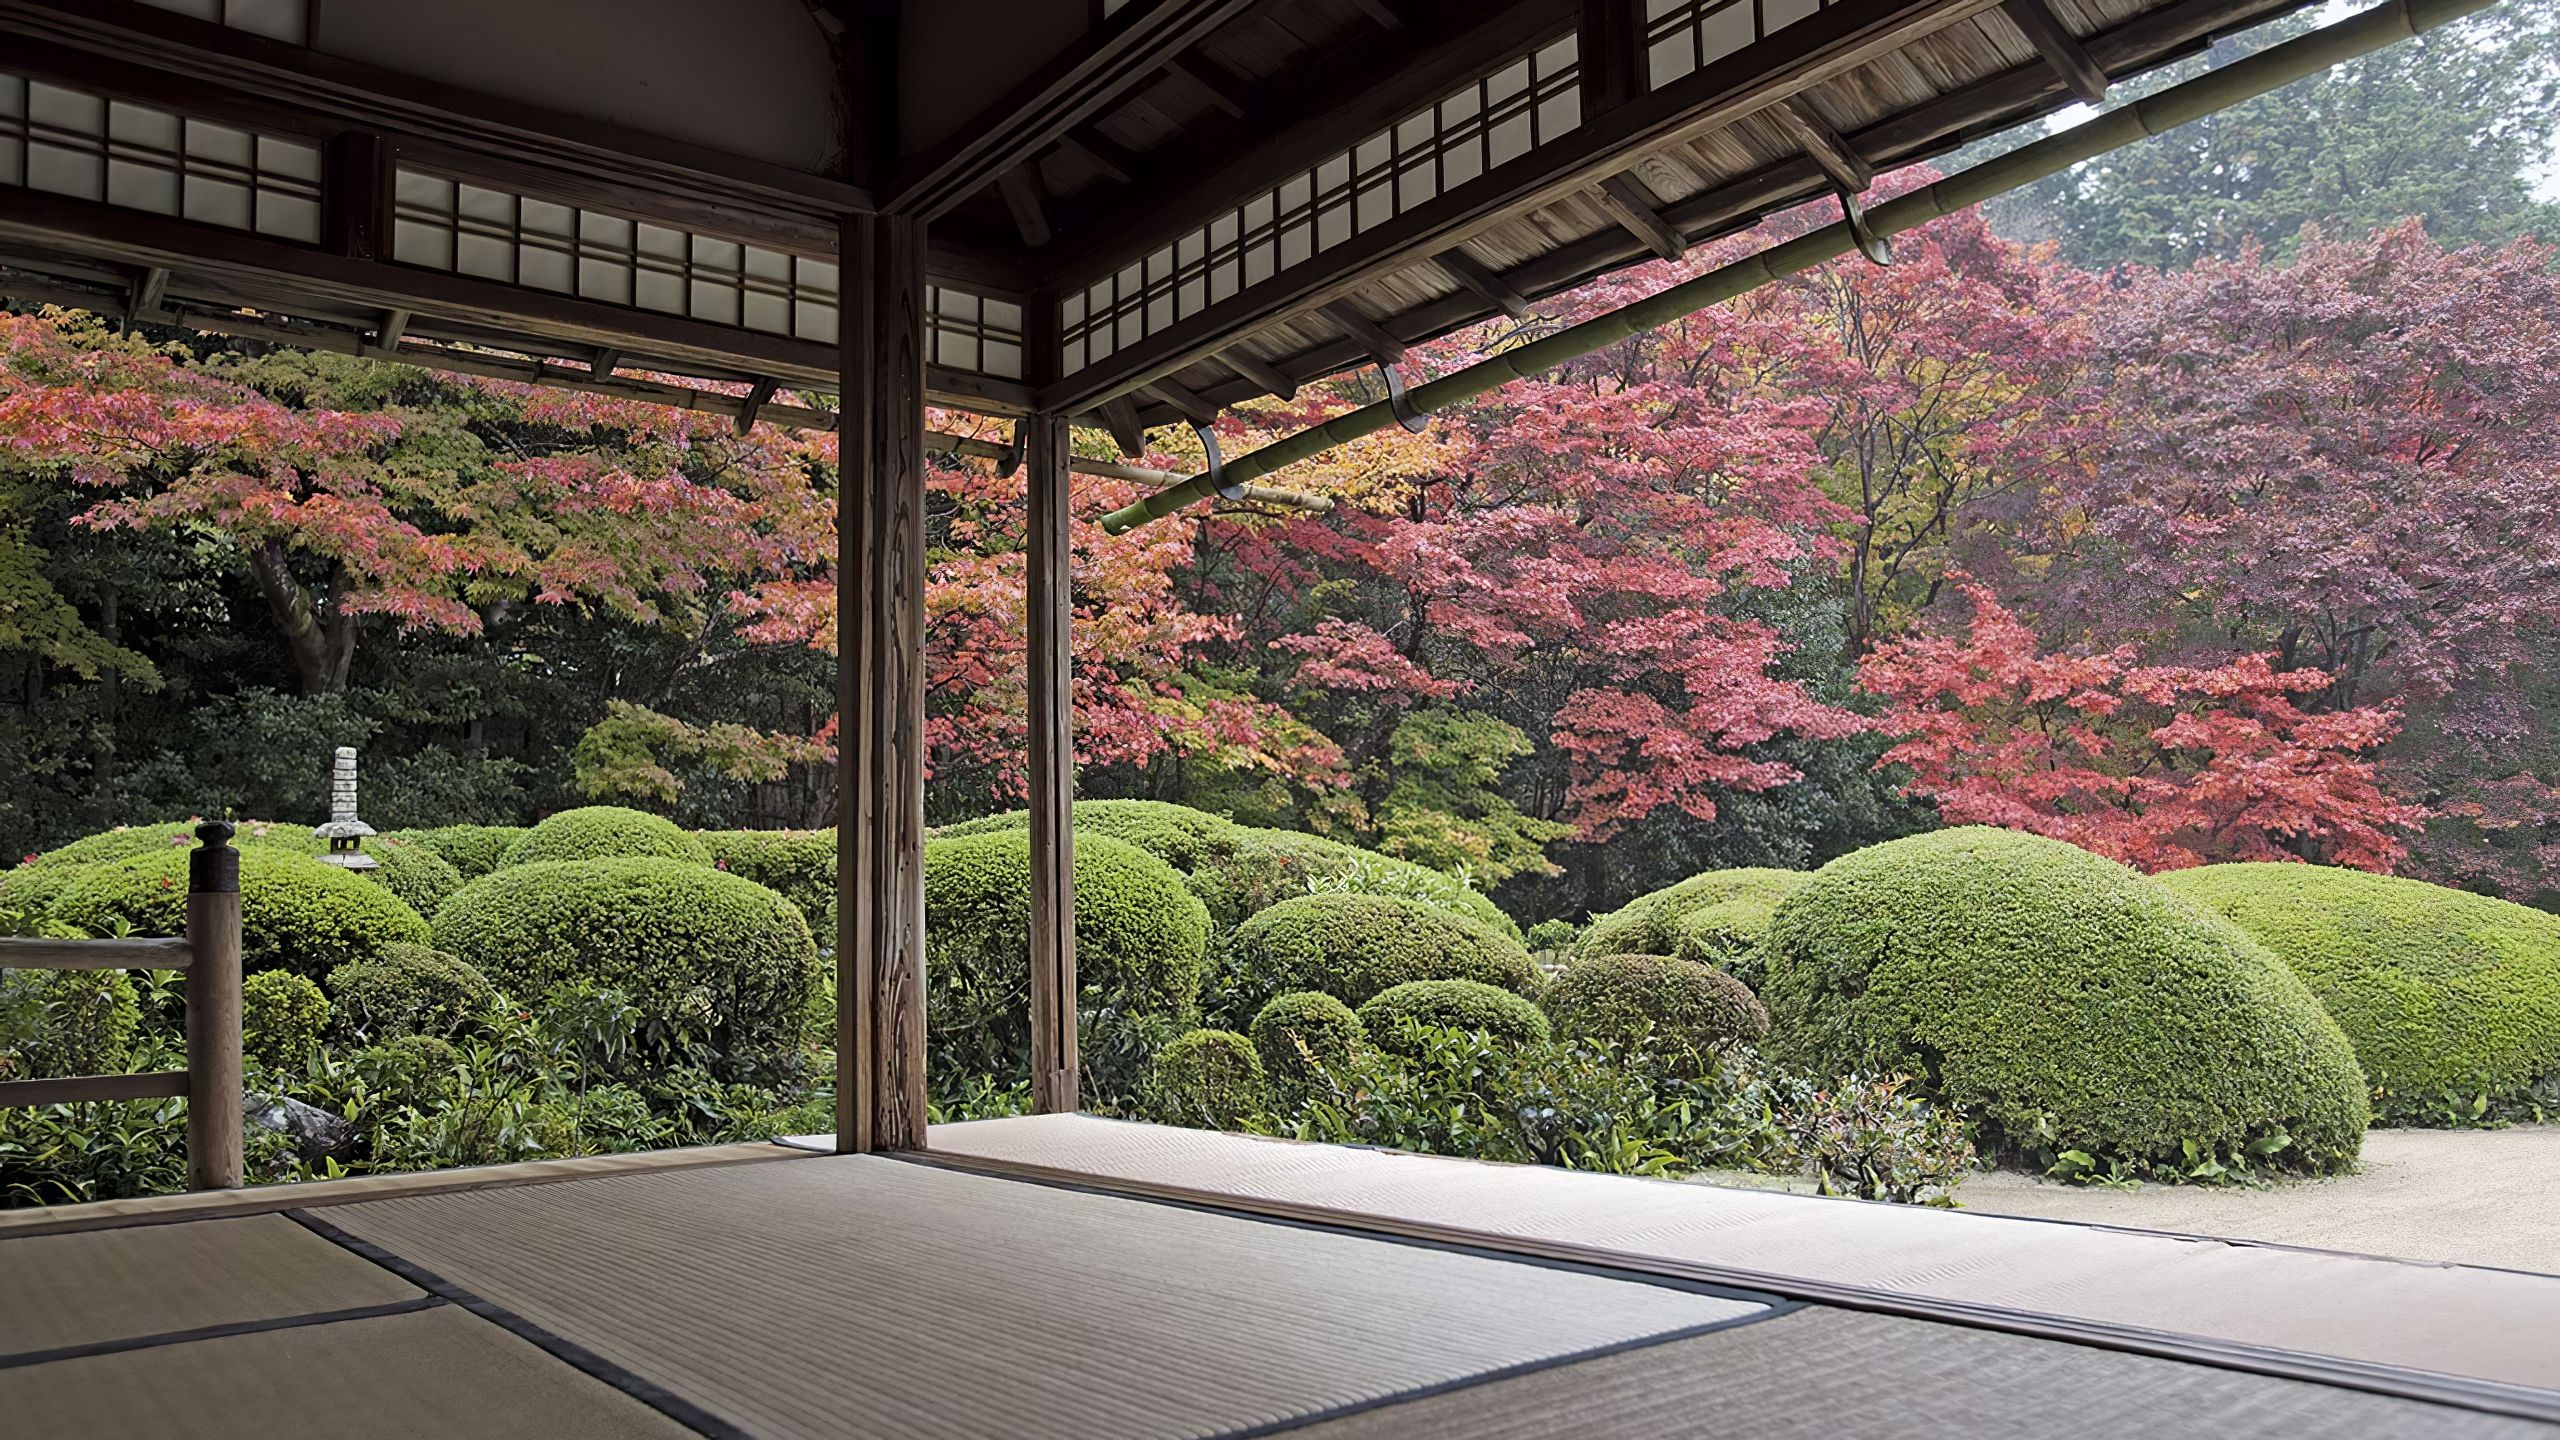 General 2560x1440 Japan garden trees courtyard zen garden